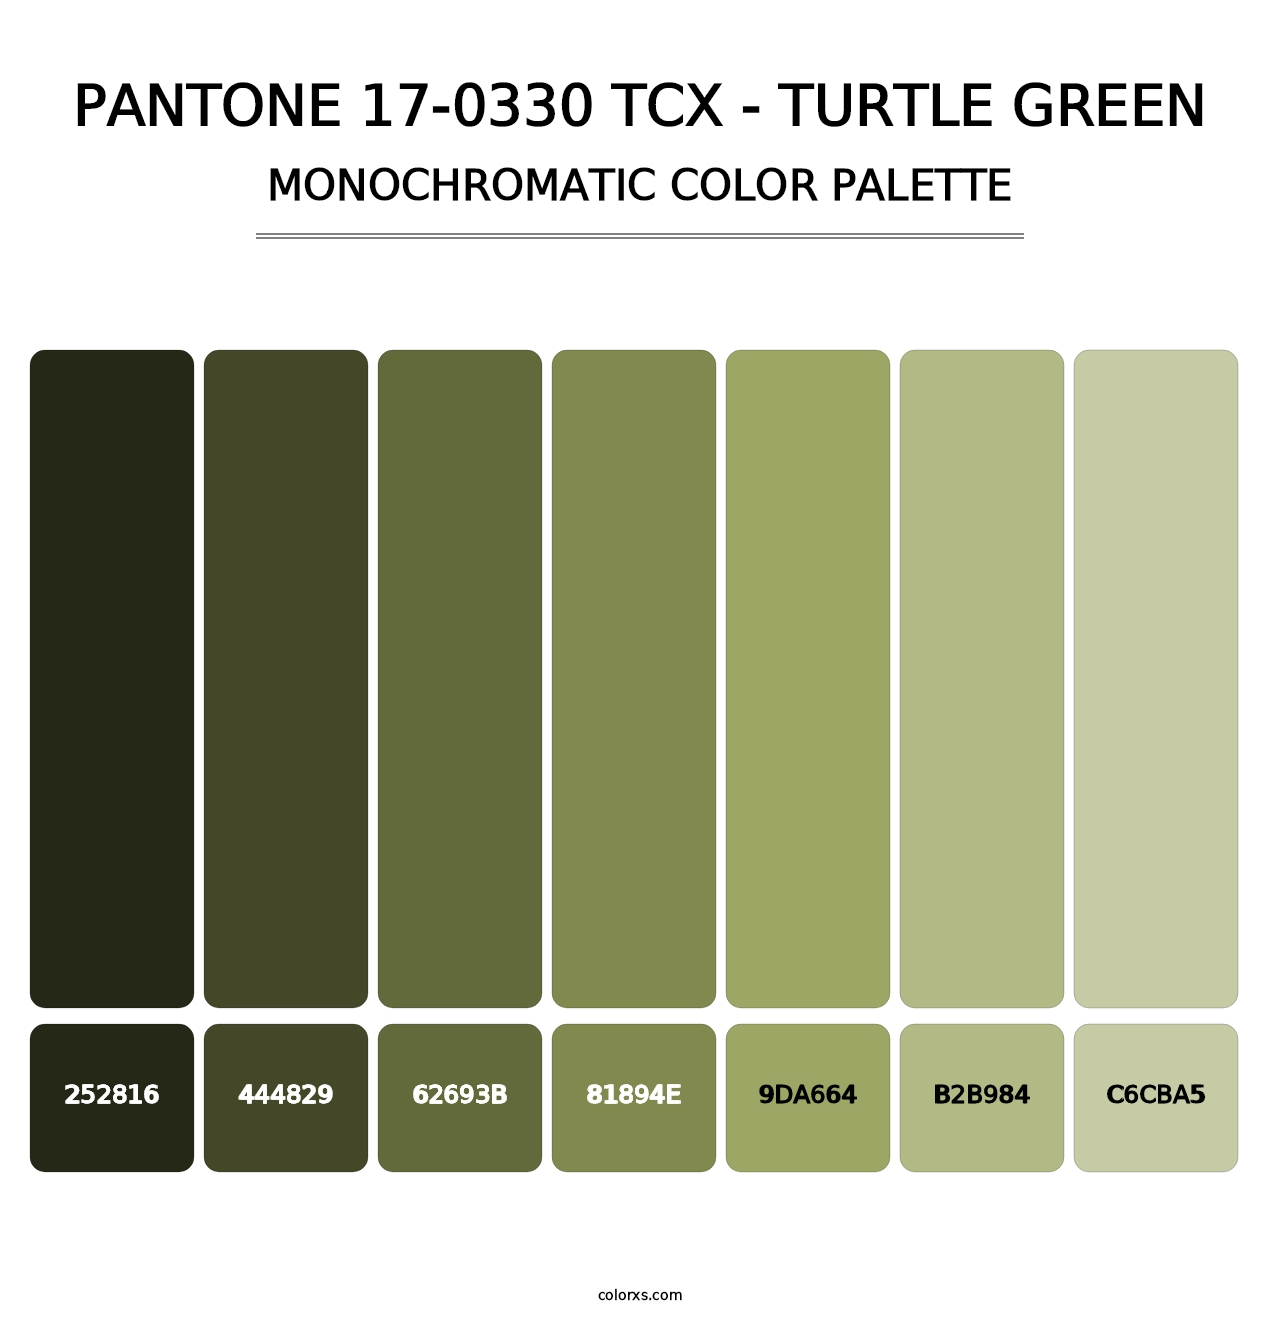 PANTONE 17-0330 TCX - Turtle Green - Monochromatic Color Palette